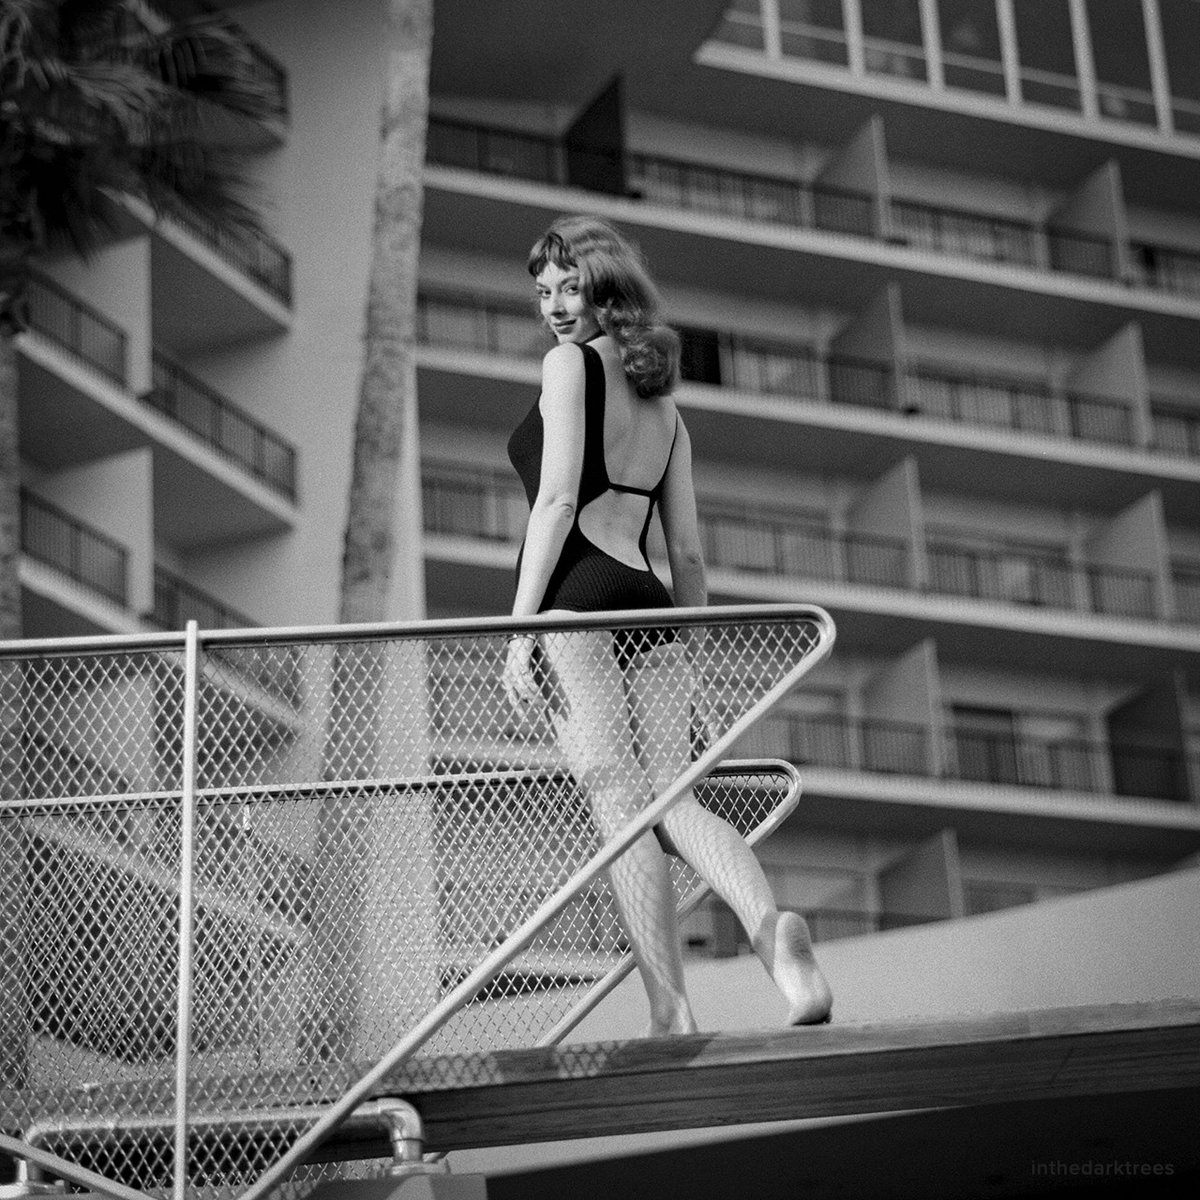 RT @Monica_FdB: ◾El outfit del verano #ArquitecturayModa

Vikki Dougan en Hotel Beverly Hills | 1️⃣9️⃣1️⃣2️⃣ | Elmer Gray
📷 Ralph Crane | 1️⃣9️⃣5️⃣7️⃣

#JuevesDeArquitectura #arquitectura #architecture #archilovers #diseño #design #fashionista